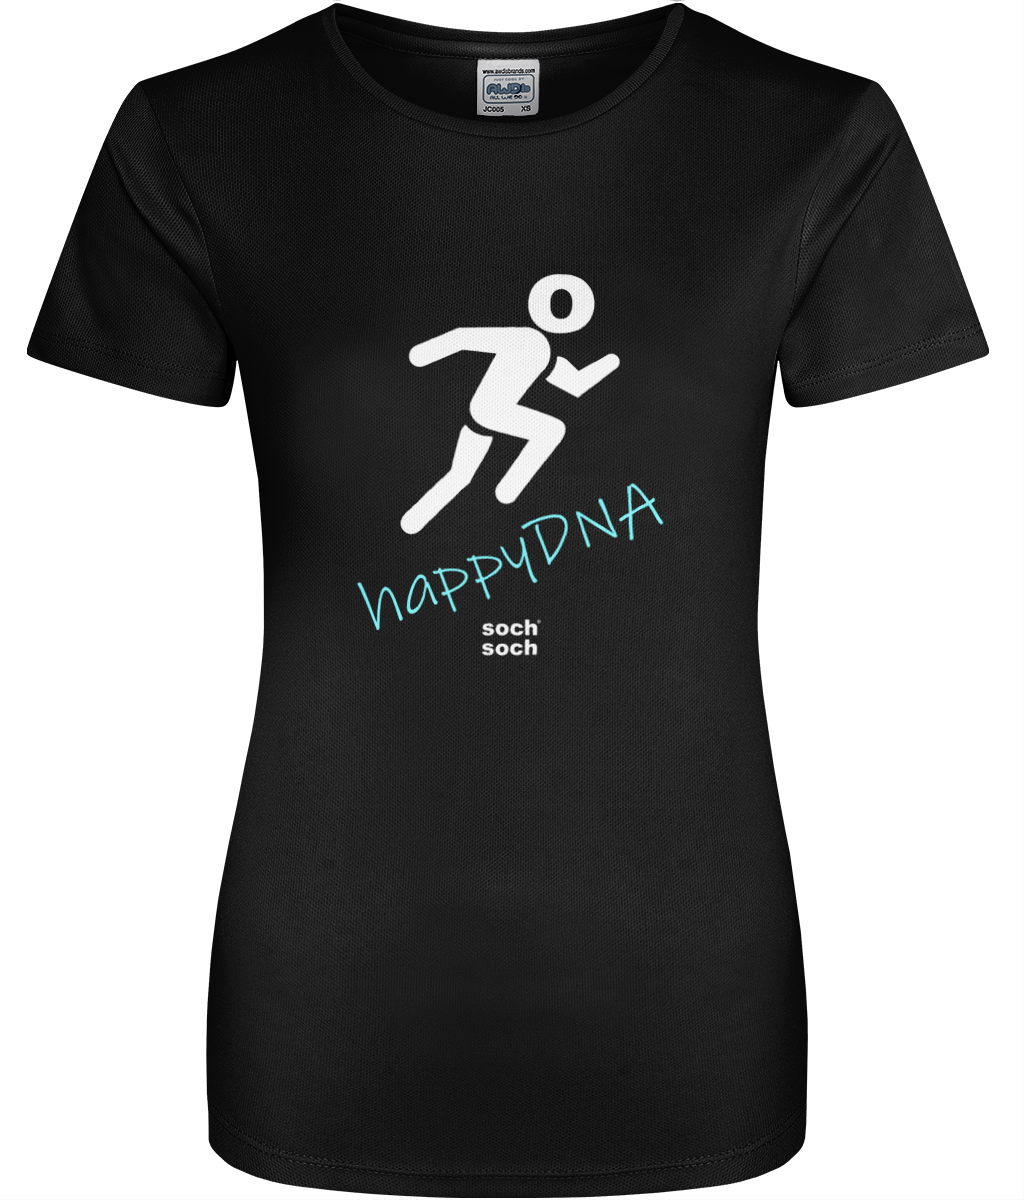 Women's Performance Running T-shirt - Turquoise happyDNA